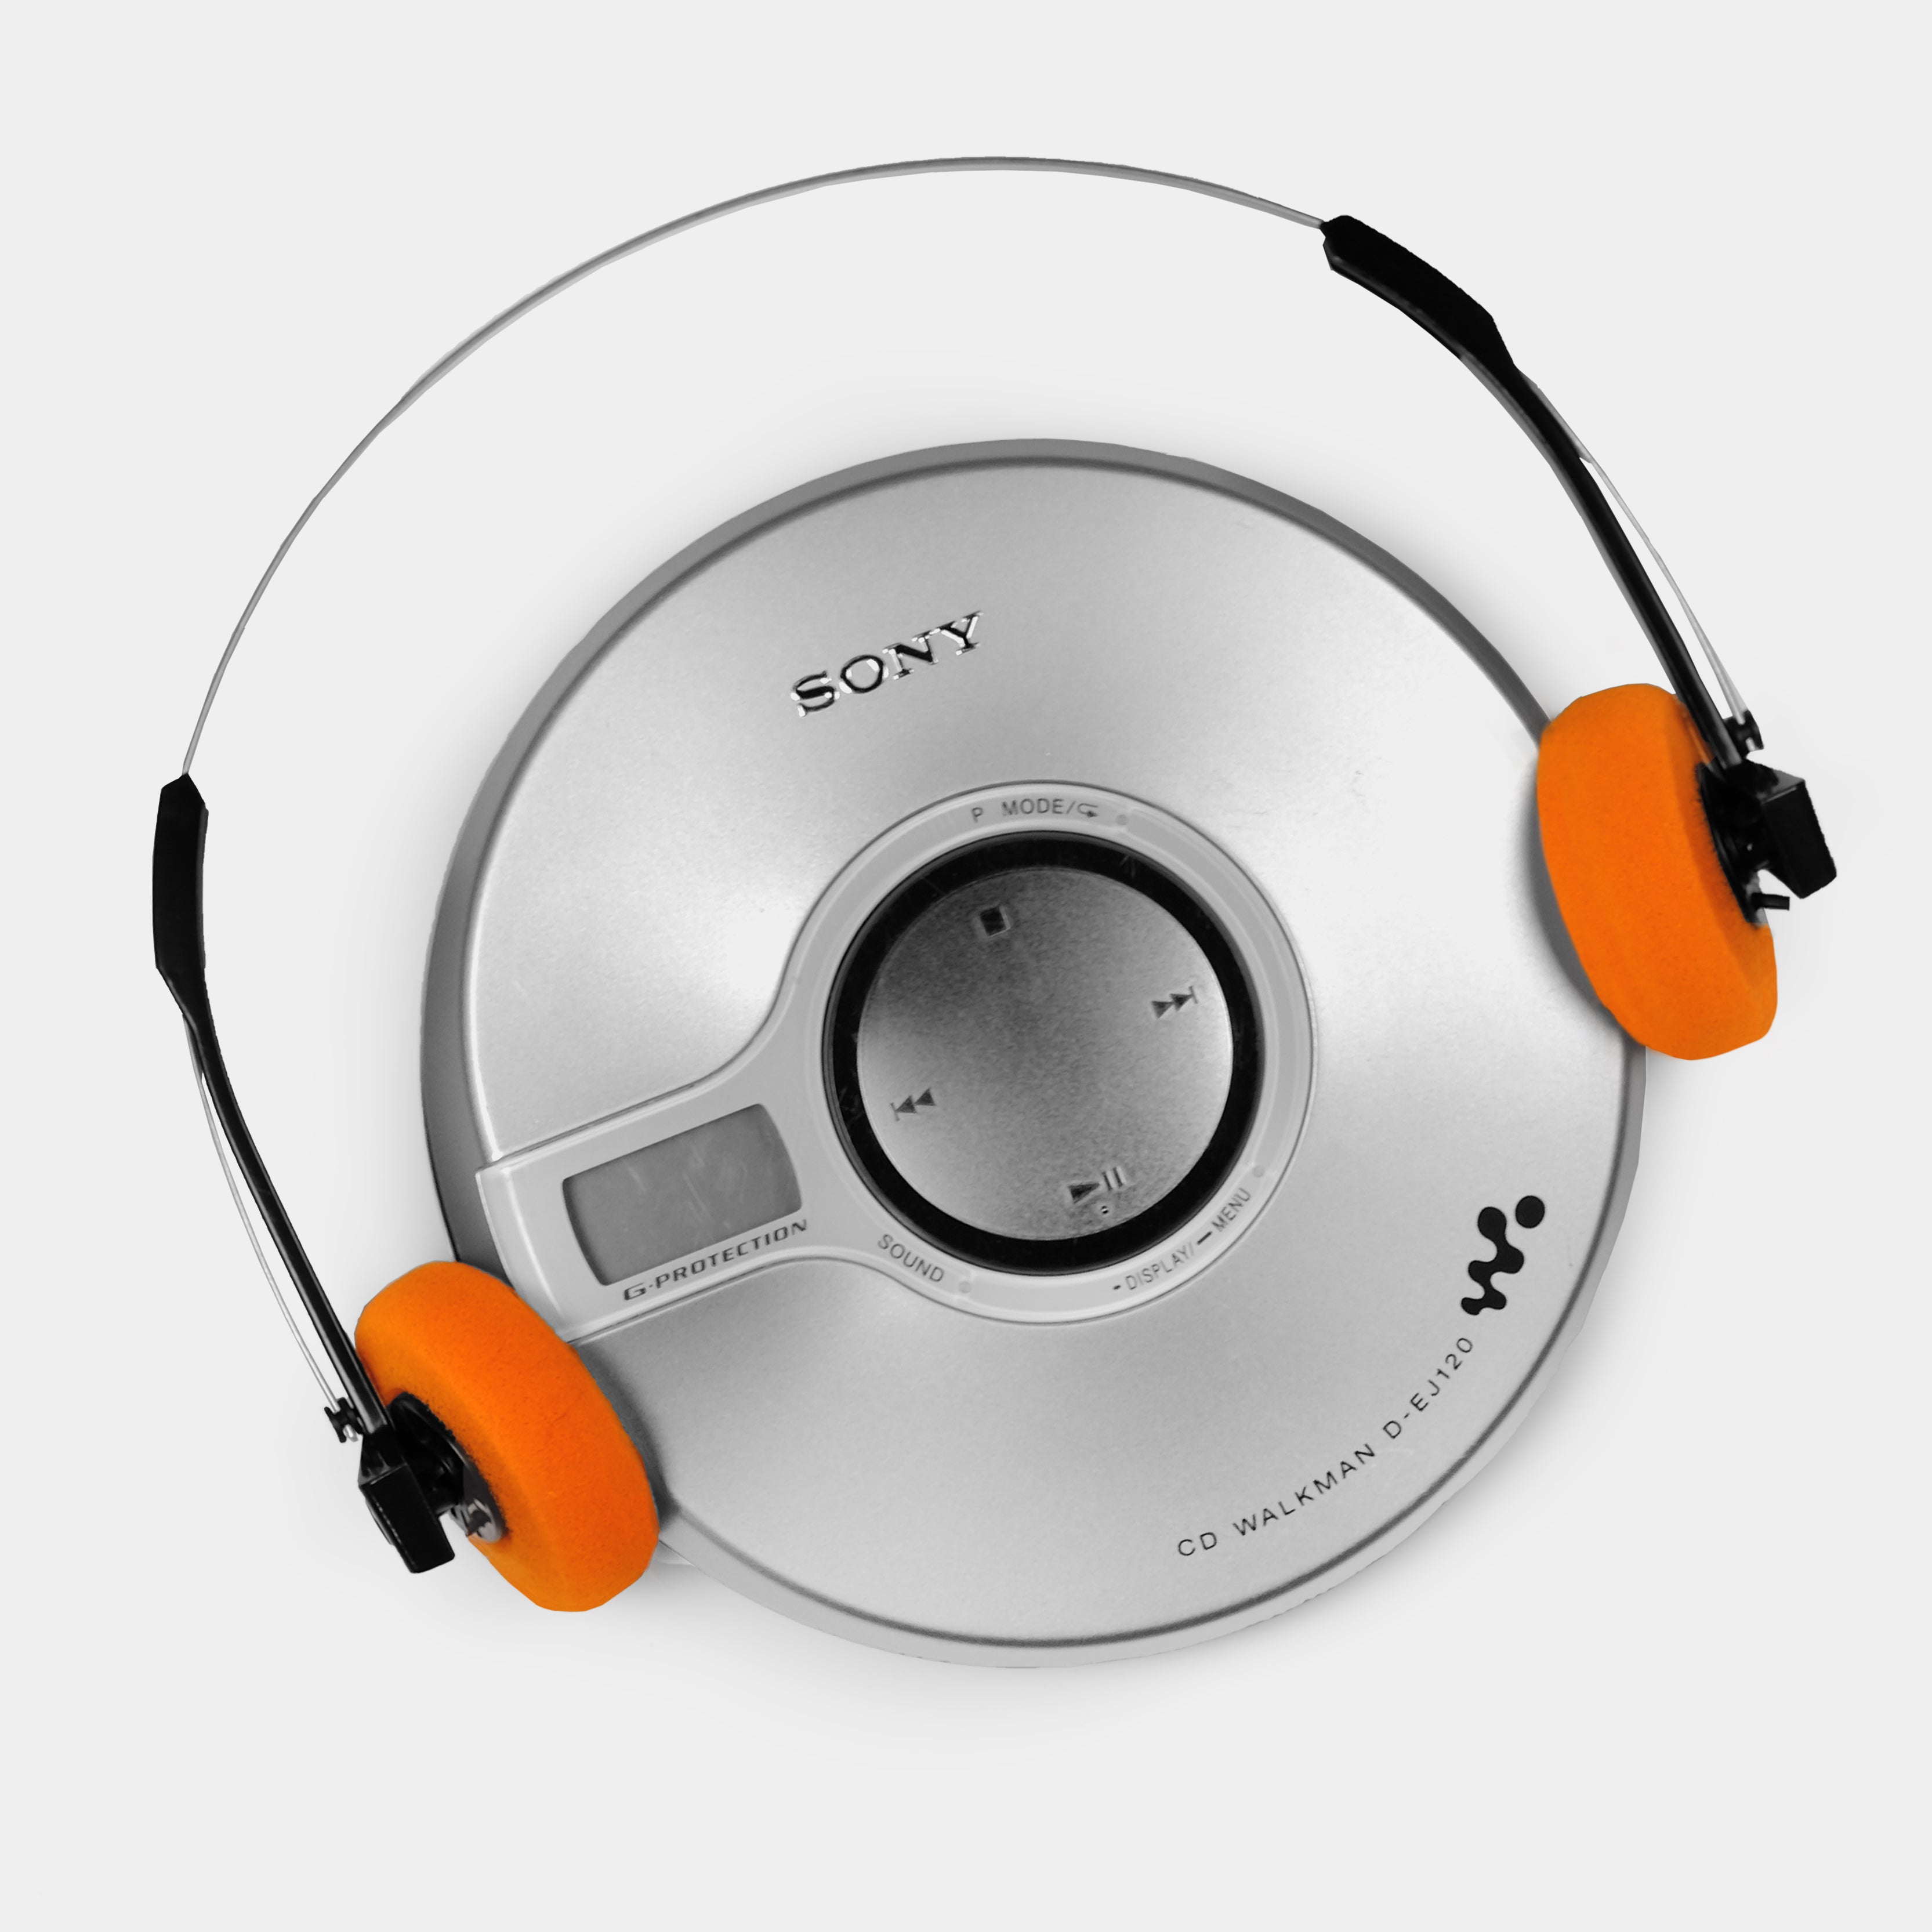 Sony Walkman D-EJ120 Portable CD Player